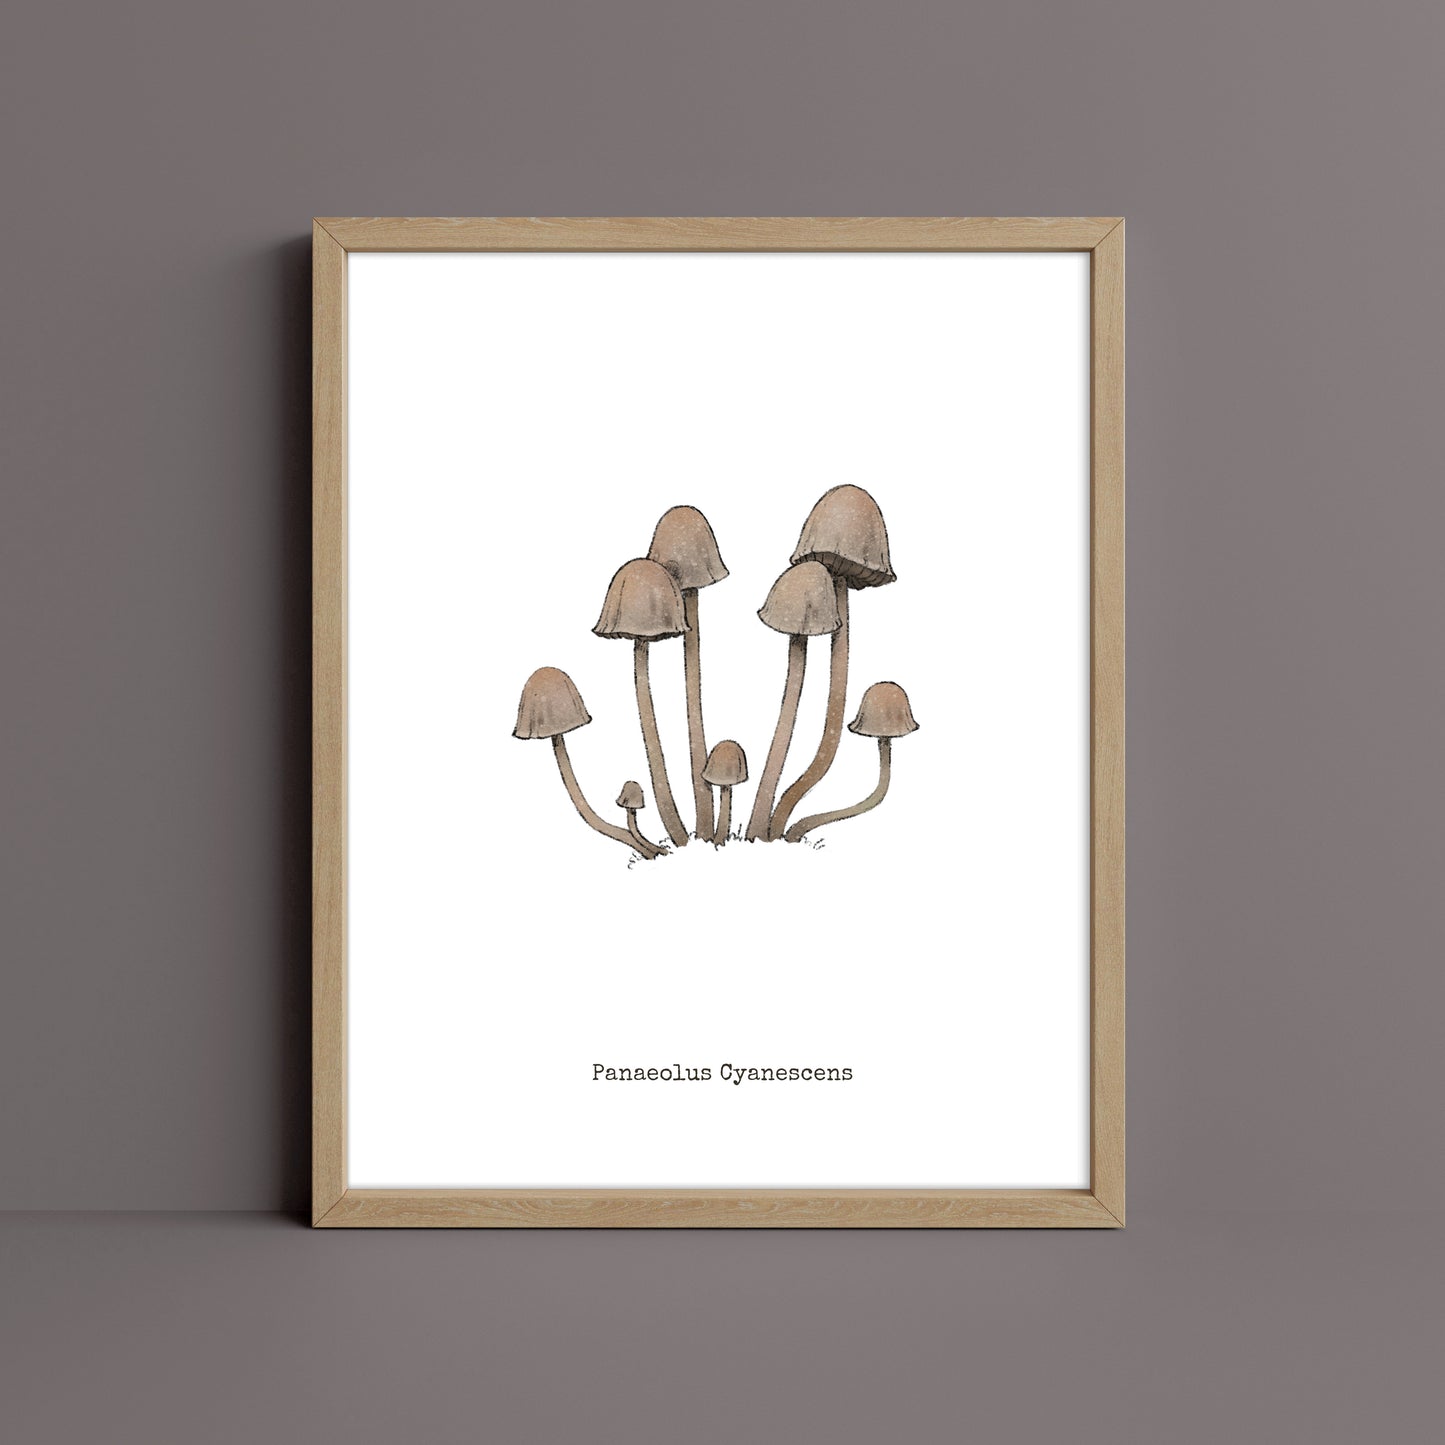 "Panaeolus Cyanescens" by Catherine Hébert - Panaeolus Cyanescens Mushroom Art Print